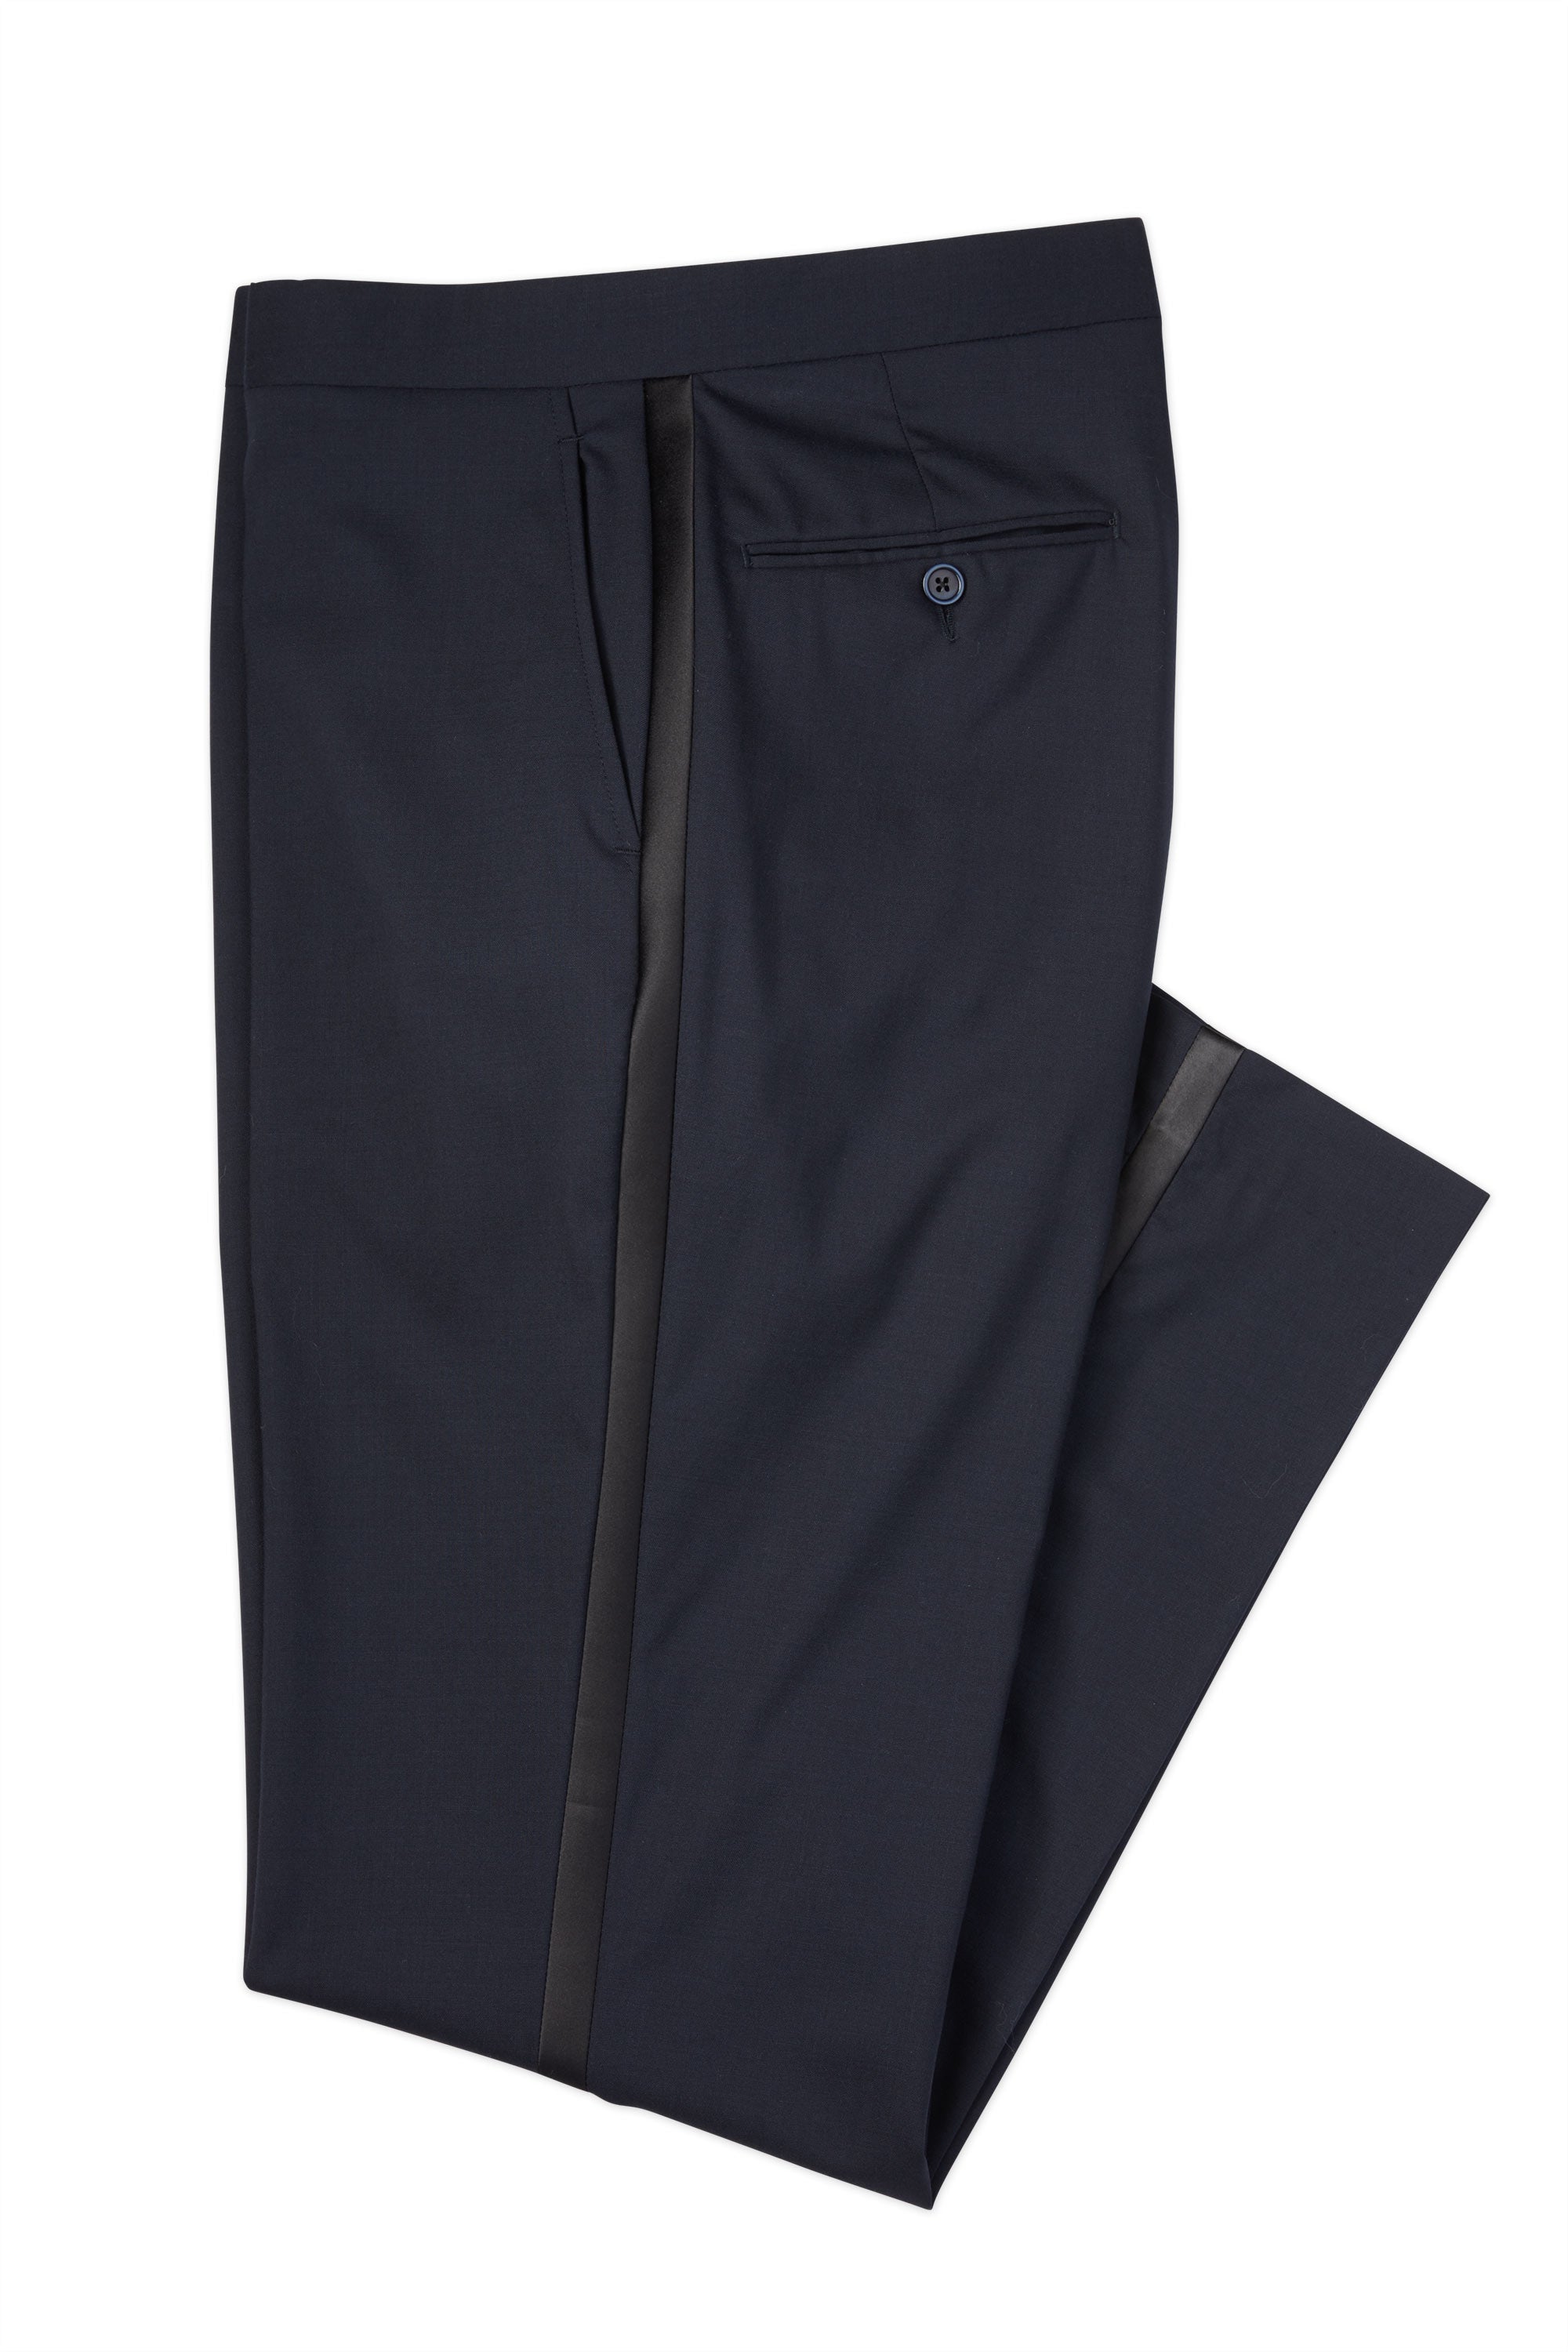 Men's Flat Front Tuxedo Pant Modern Cut - NAVY 98/2 WOOL/LYCRA SUPER100